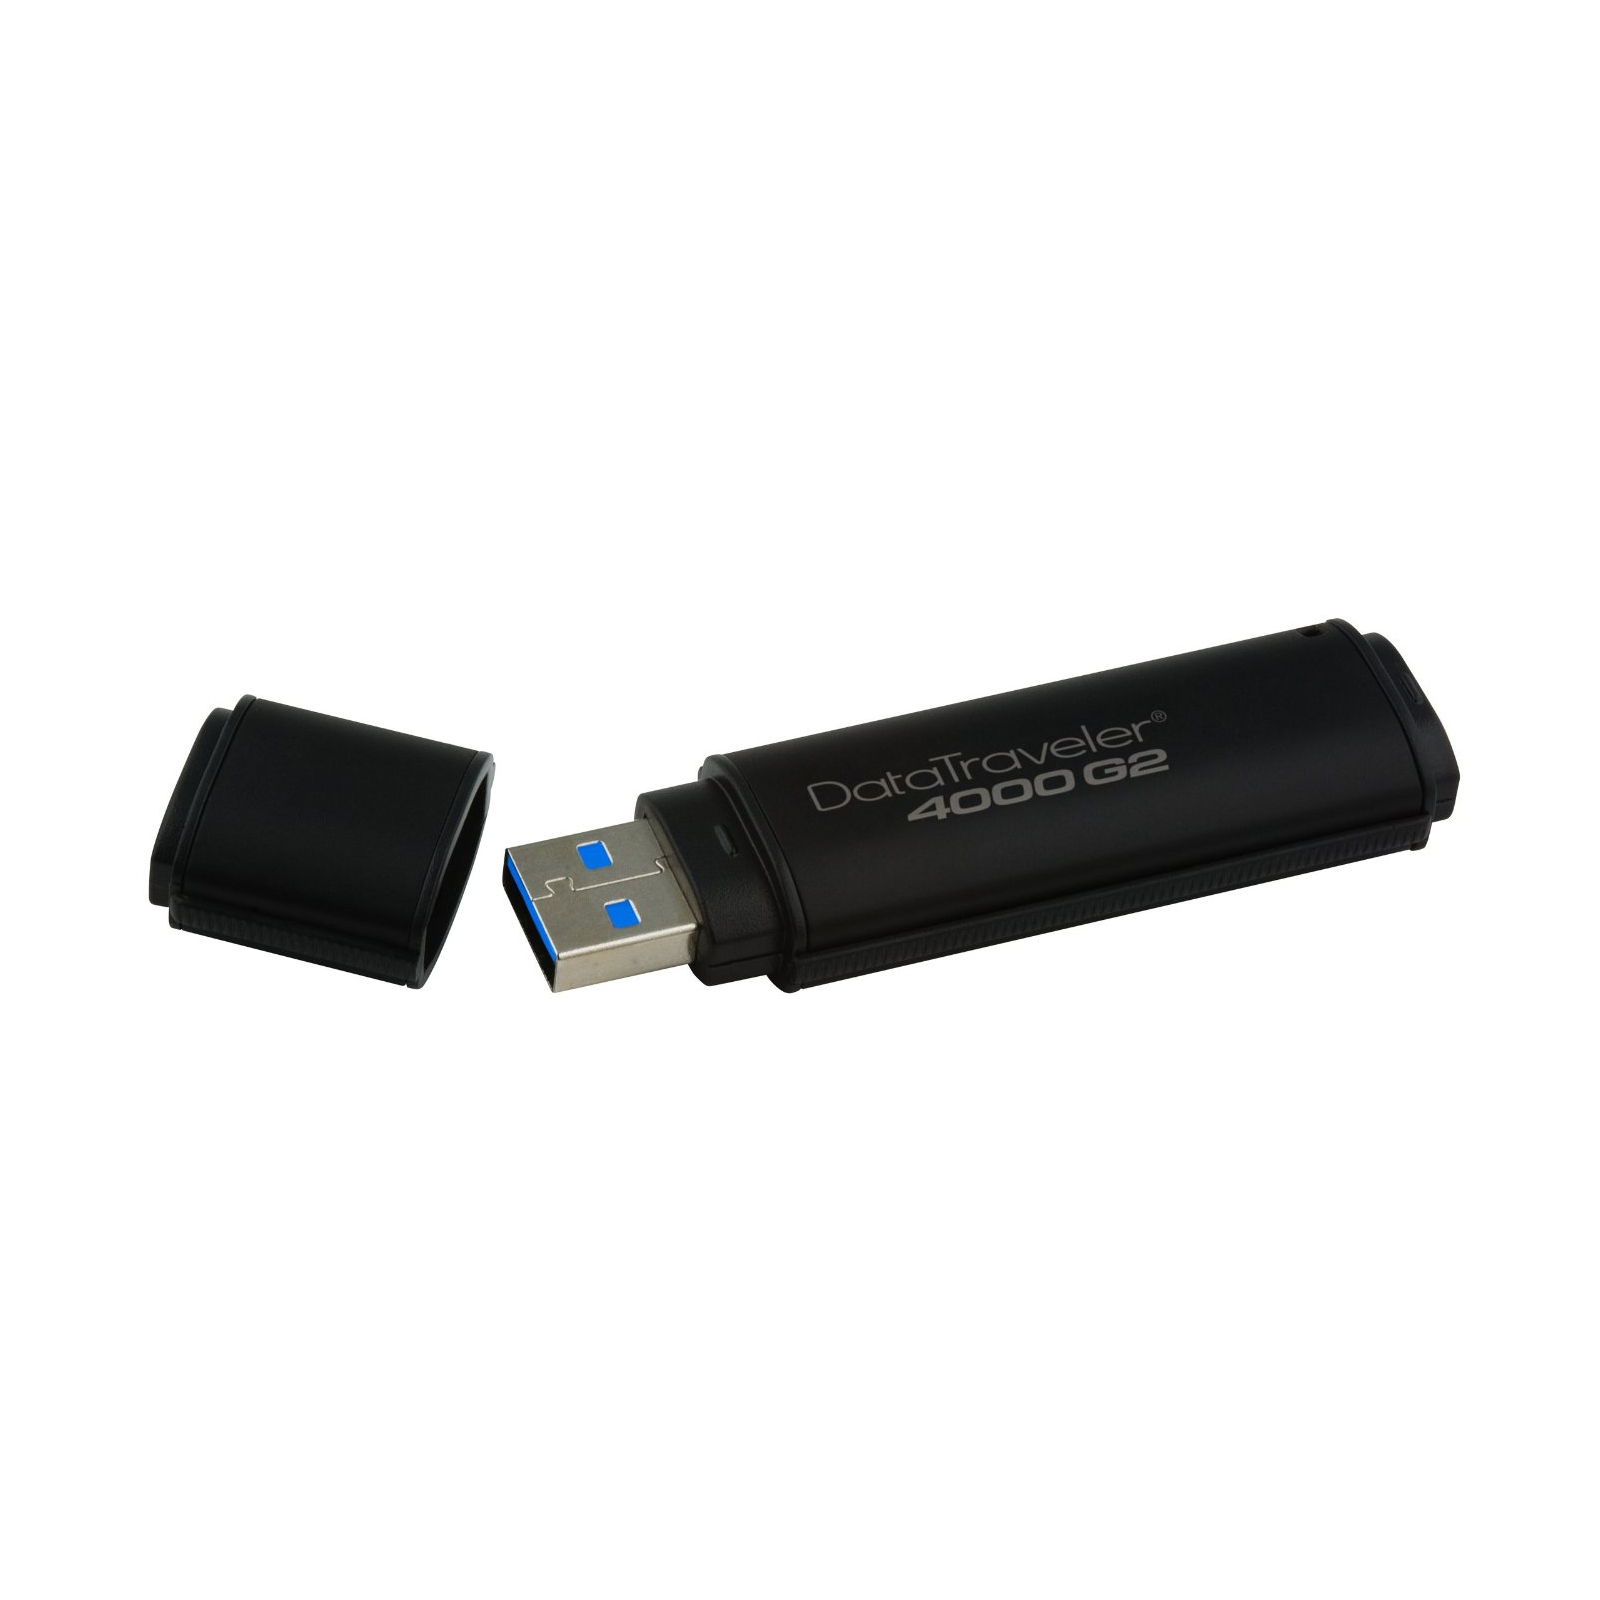 USB флеш накопитель Kingston 16GB DataTraveler 4000 G2 Metal Black USB 3.0 (DT4000G2/16GB) изображение 4